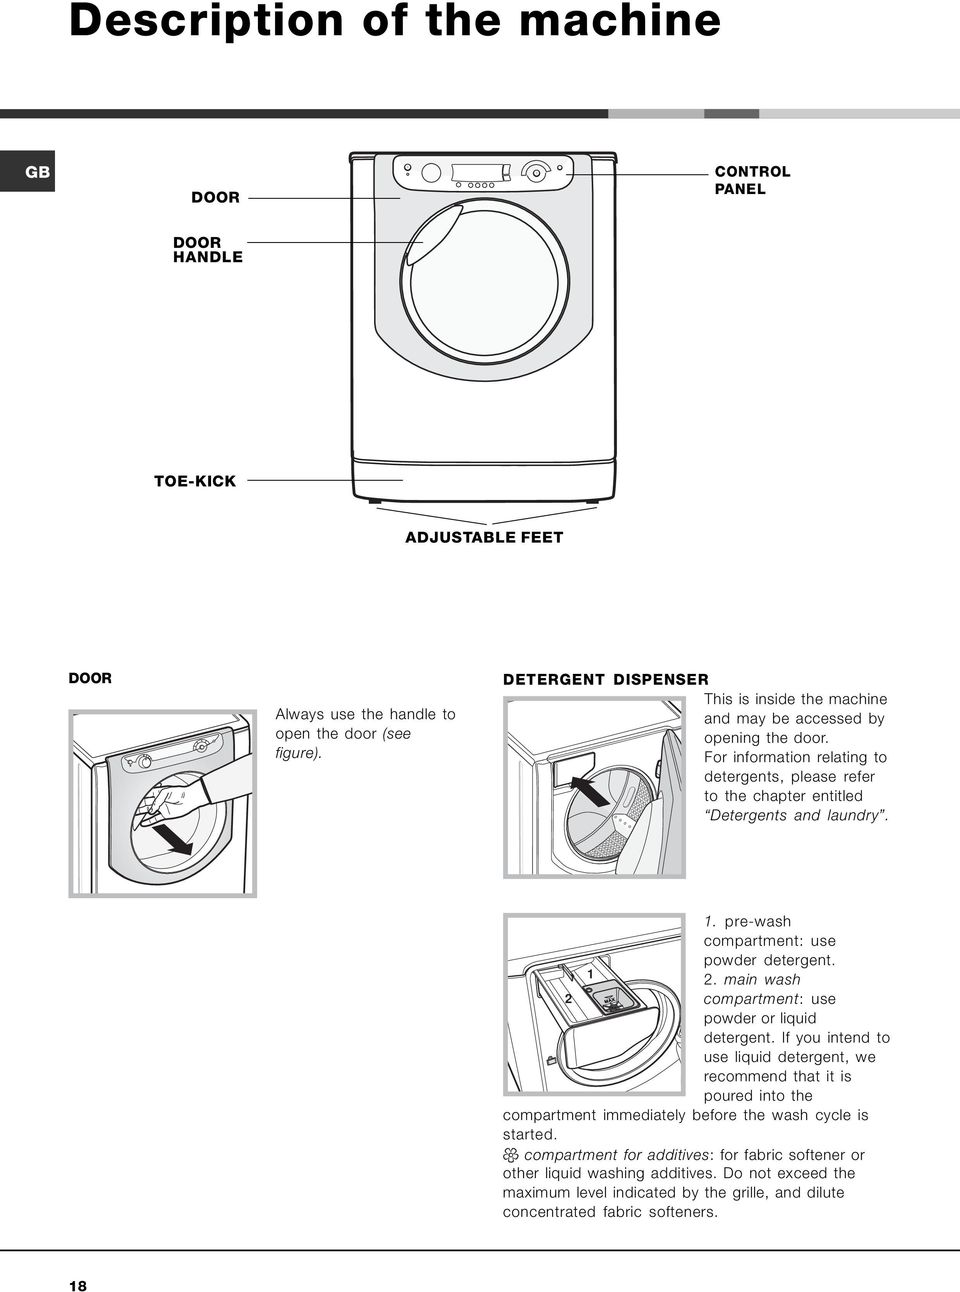 pre-wash compartment: use powder detergent. 1 2. main wash 2 compartment: use powder or liquid detergent.